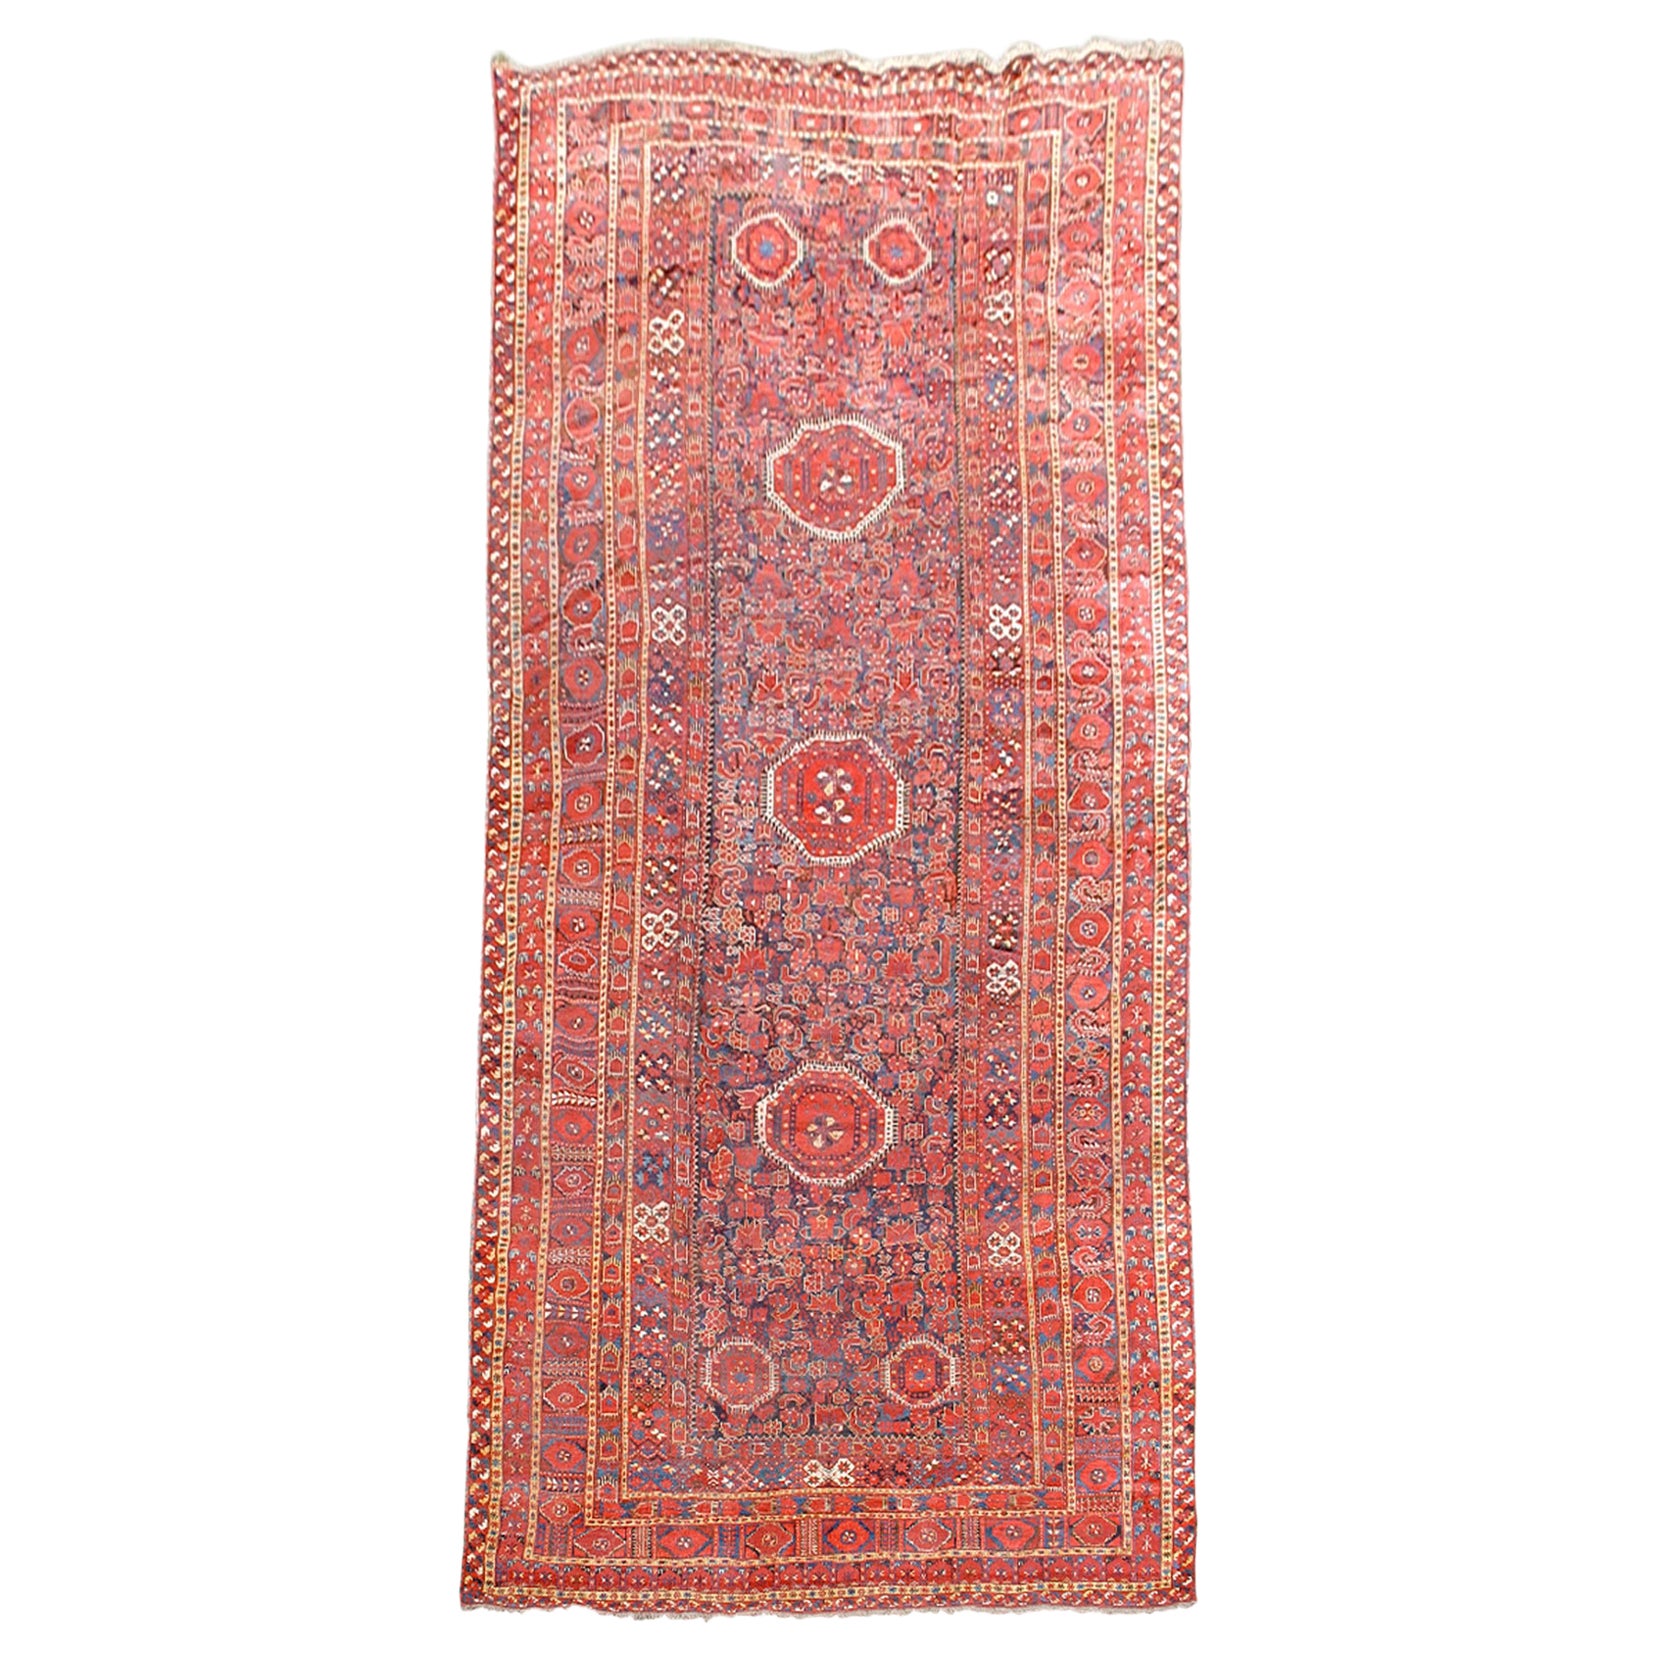 Grand tapis long Bashir ouzbek ancien, 19ème siècle